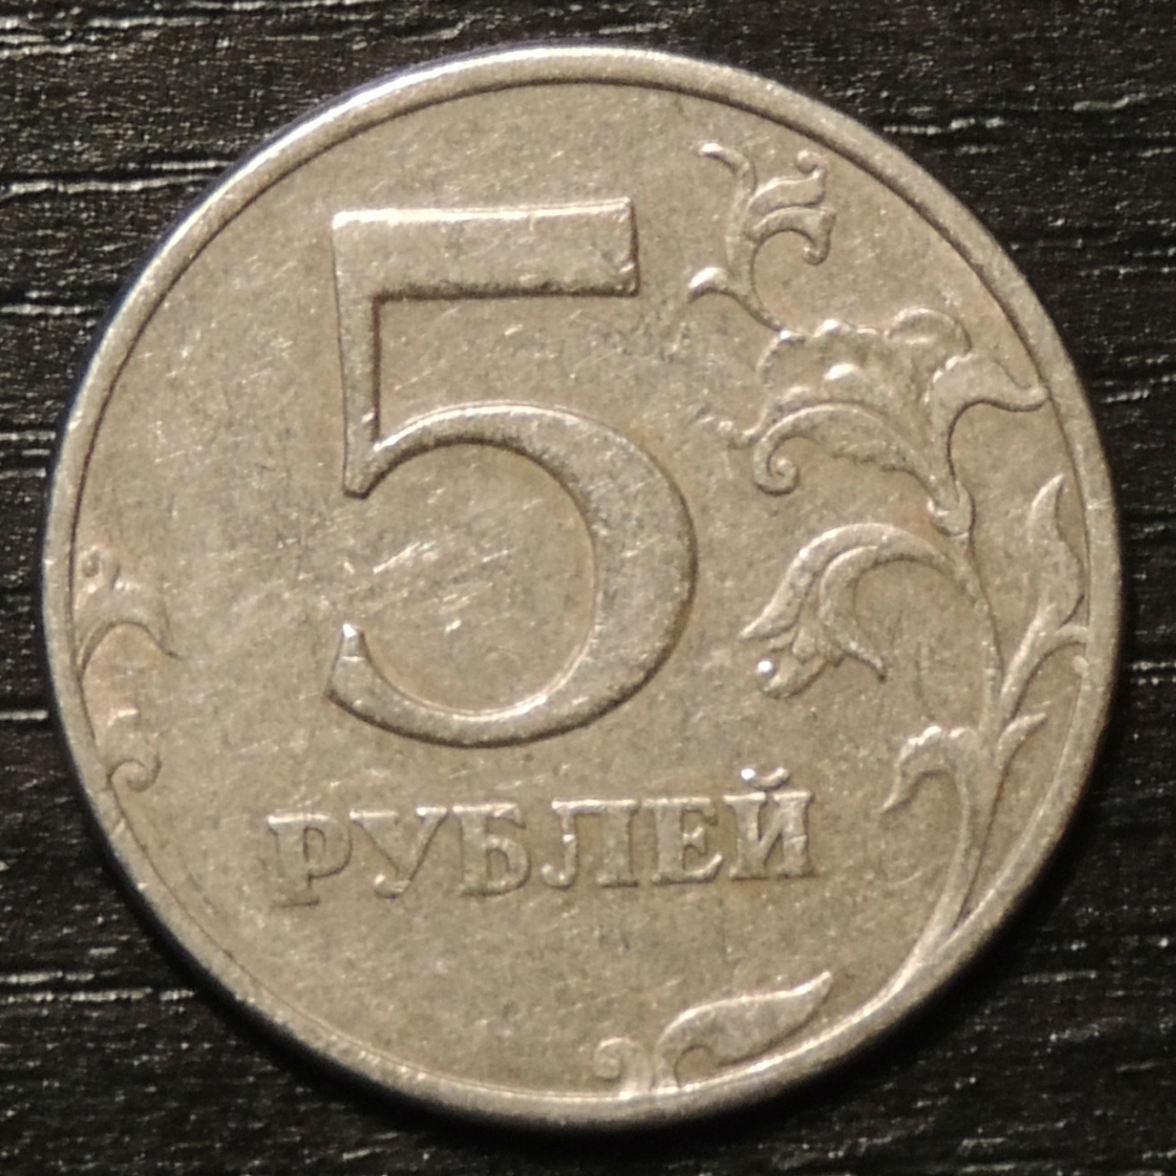 13 5 в рублях. 5 Рублей 1998 СПМД. Пять рублей СПМД 1998. 5 Рублей 1993 года. Монета 5 рублей.